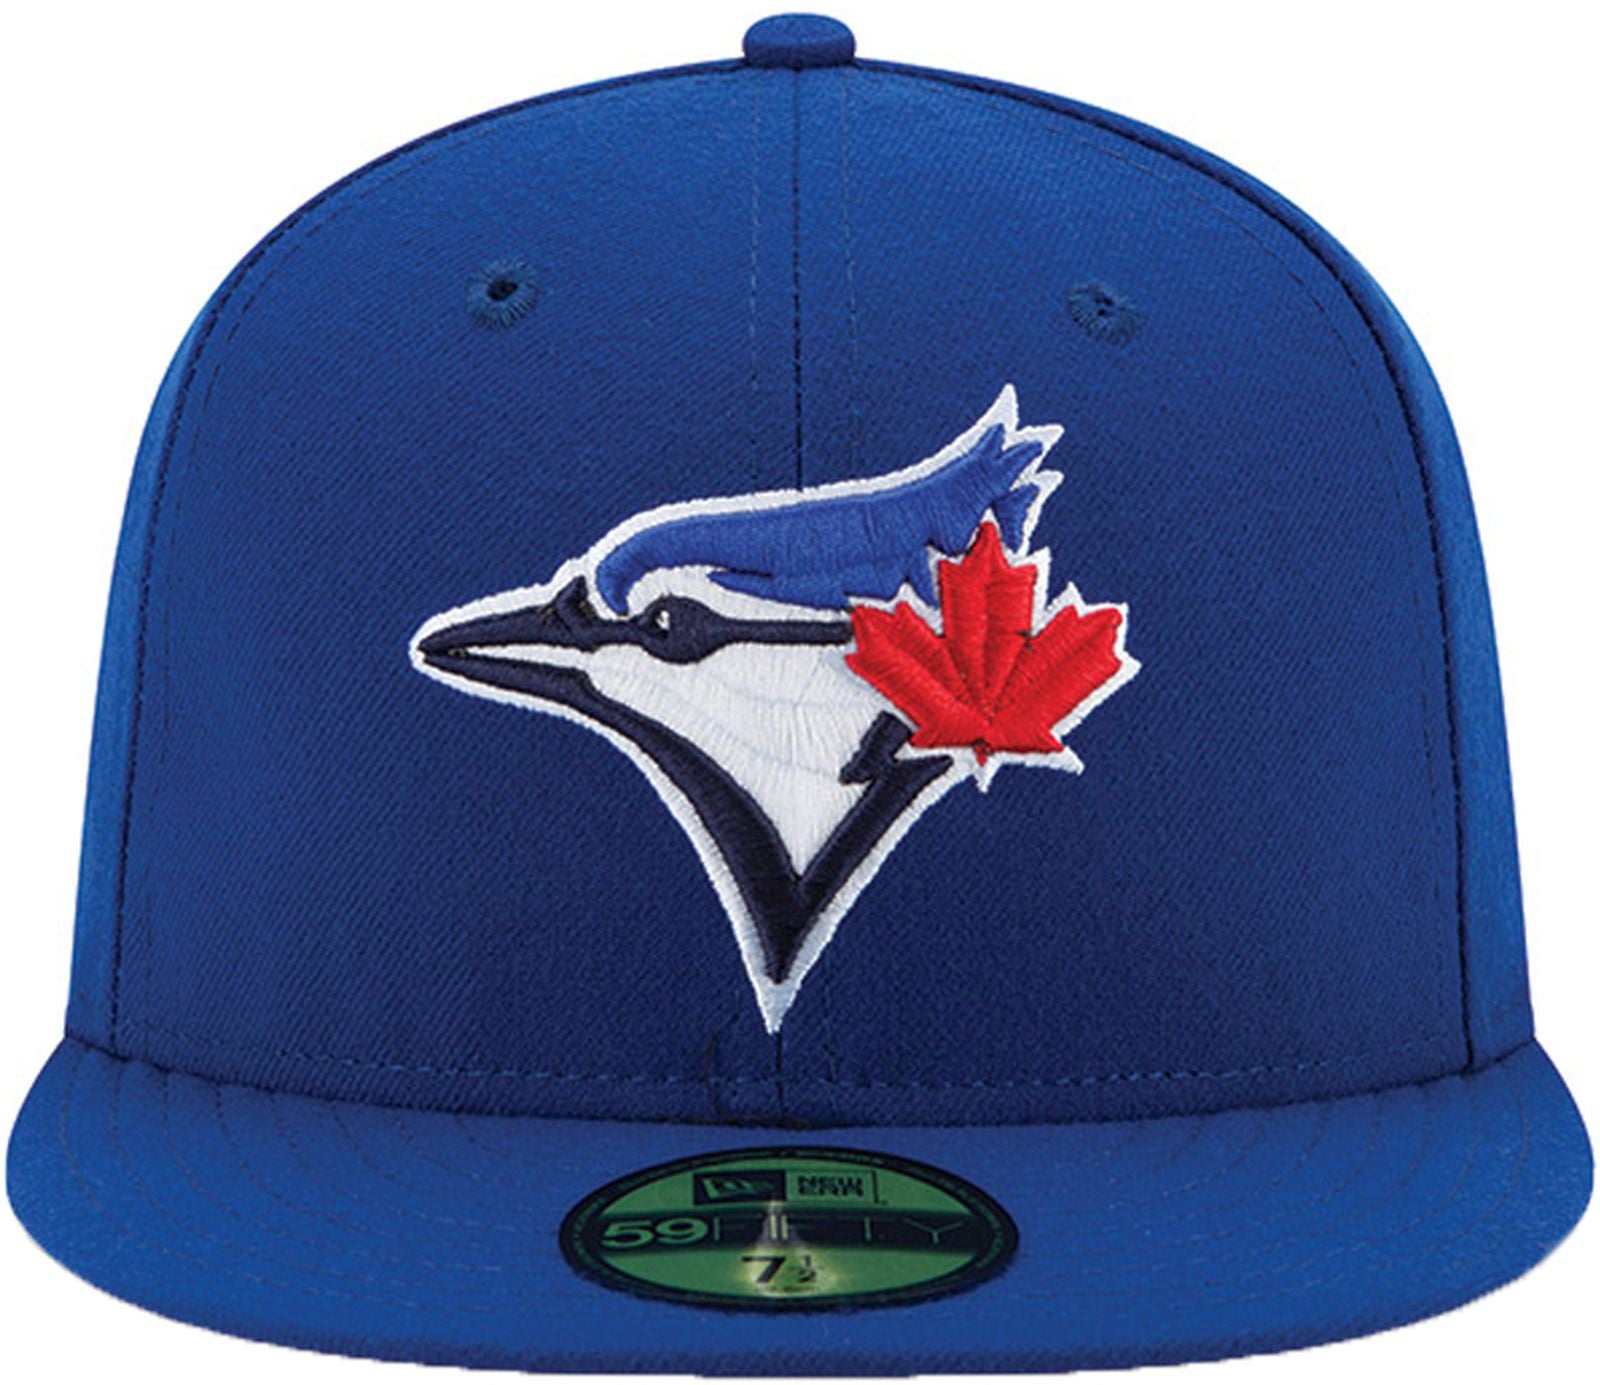 New Era - MLB Toronto Blue Jays Authentic On-Field 59Fifty Cap - blue